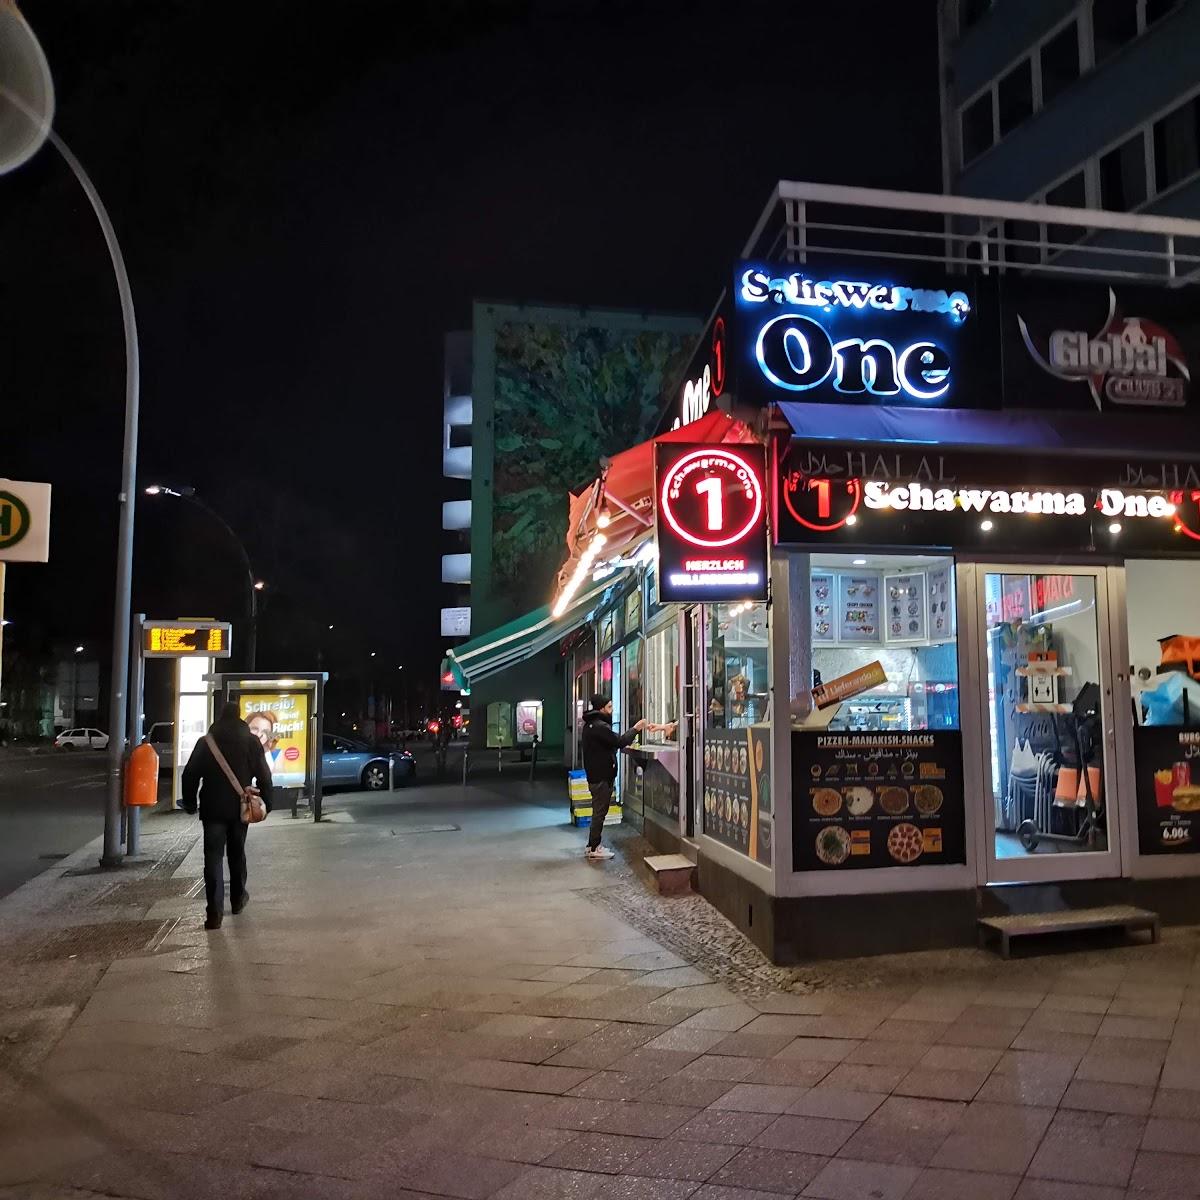 Restaurant "Shawarma One Berlin" in Berlin